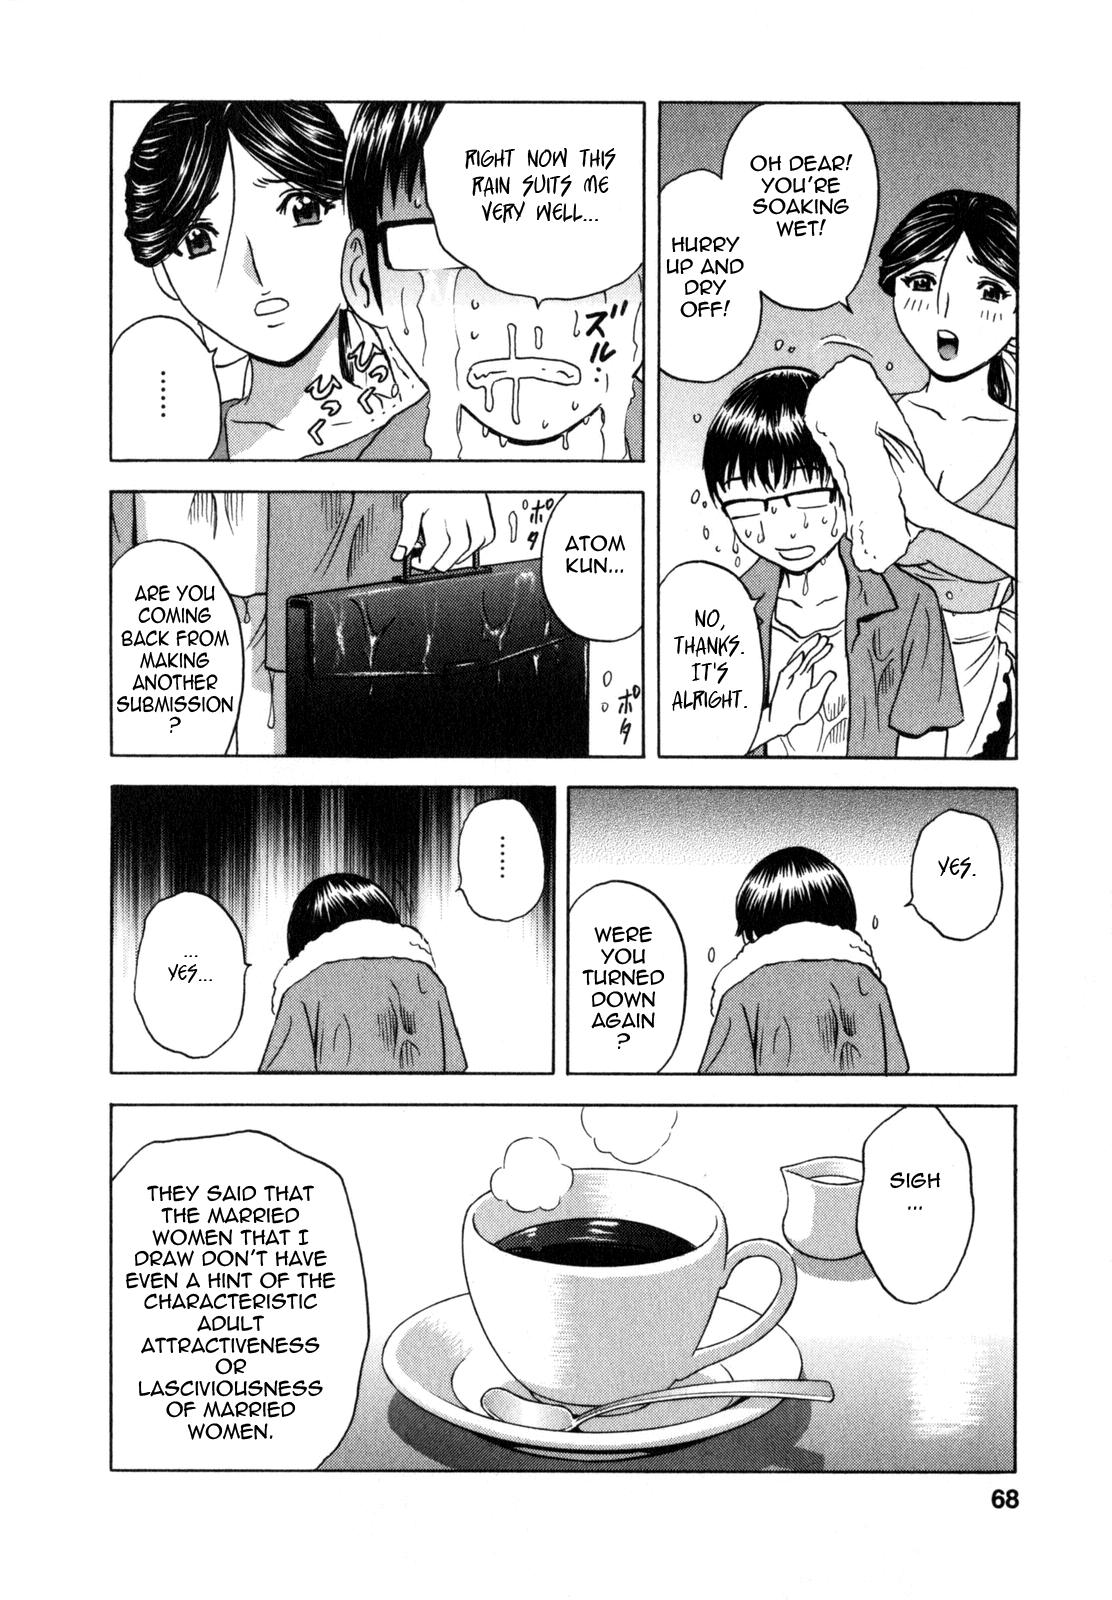 [Hidemaru] Life with Married Women Just Like a Manga 1 - Ch. 1-4 [English] {Tadanohito} 71